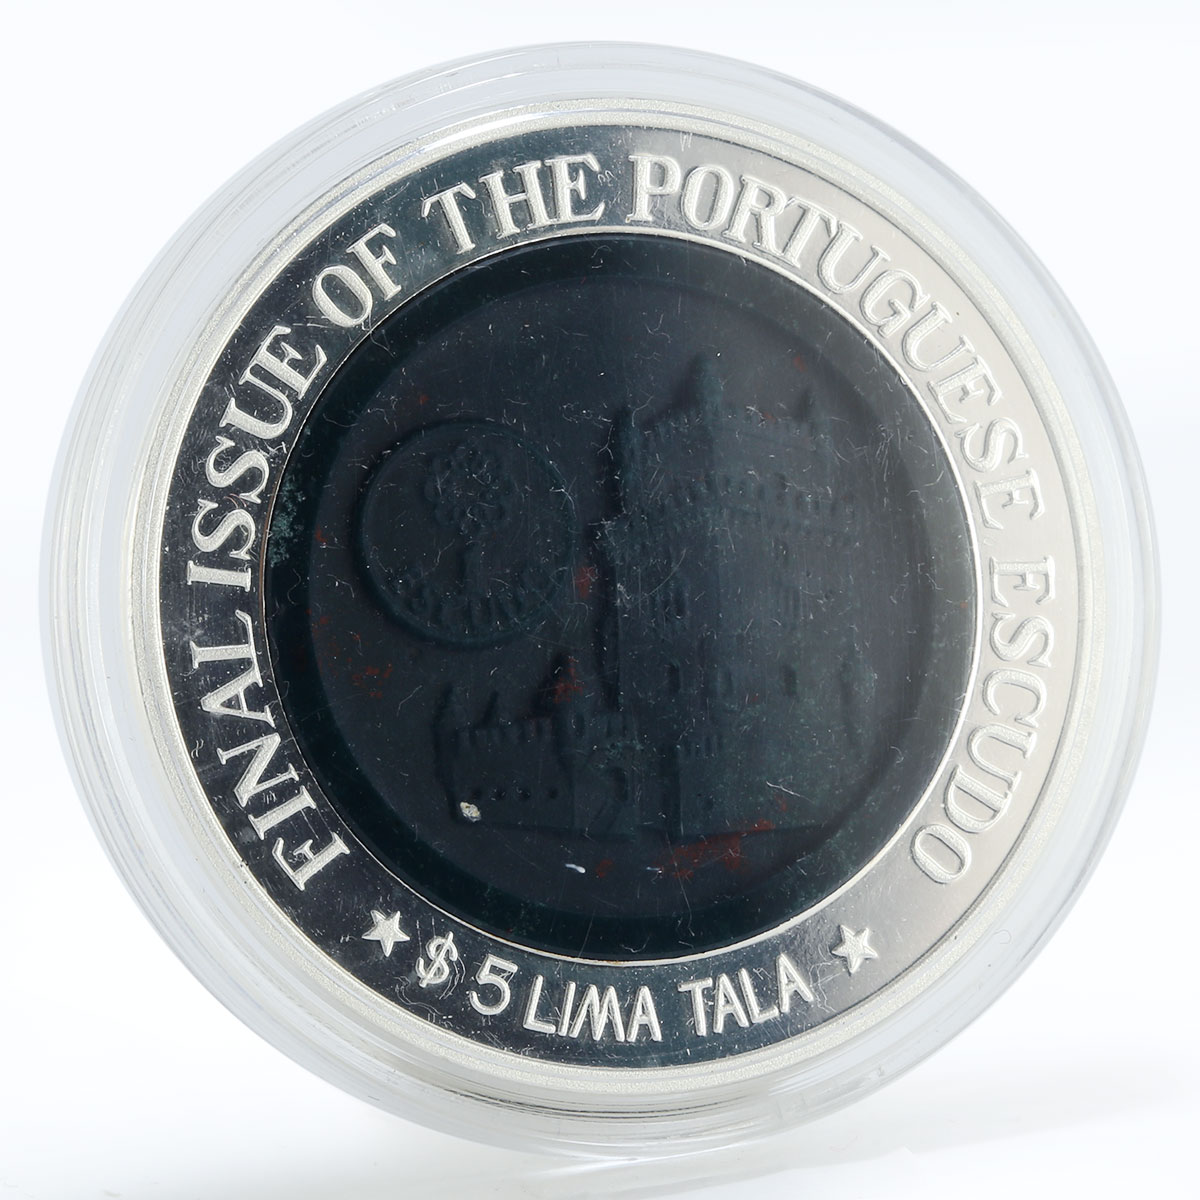 Tokelau 5 tala Portugese Escudo proof silver coin 2002